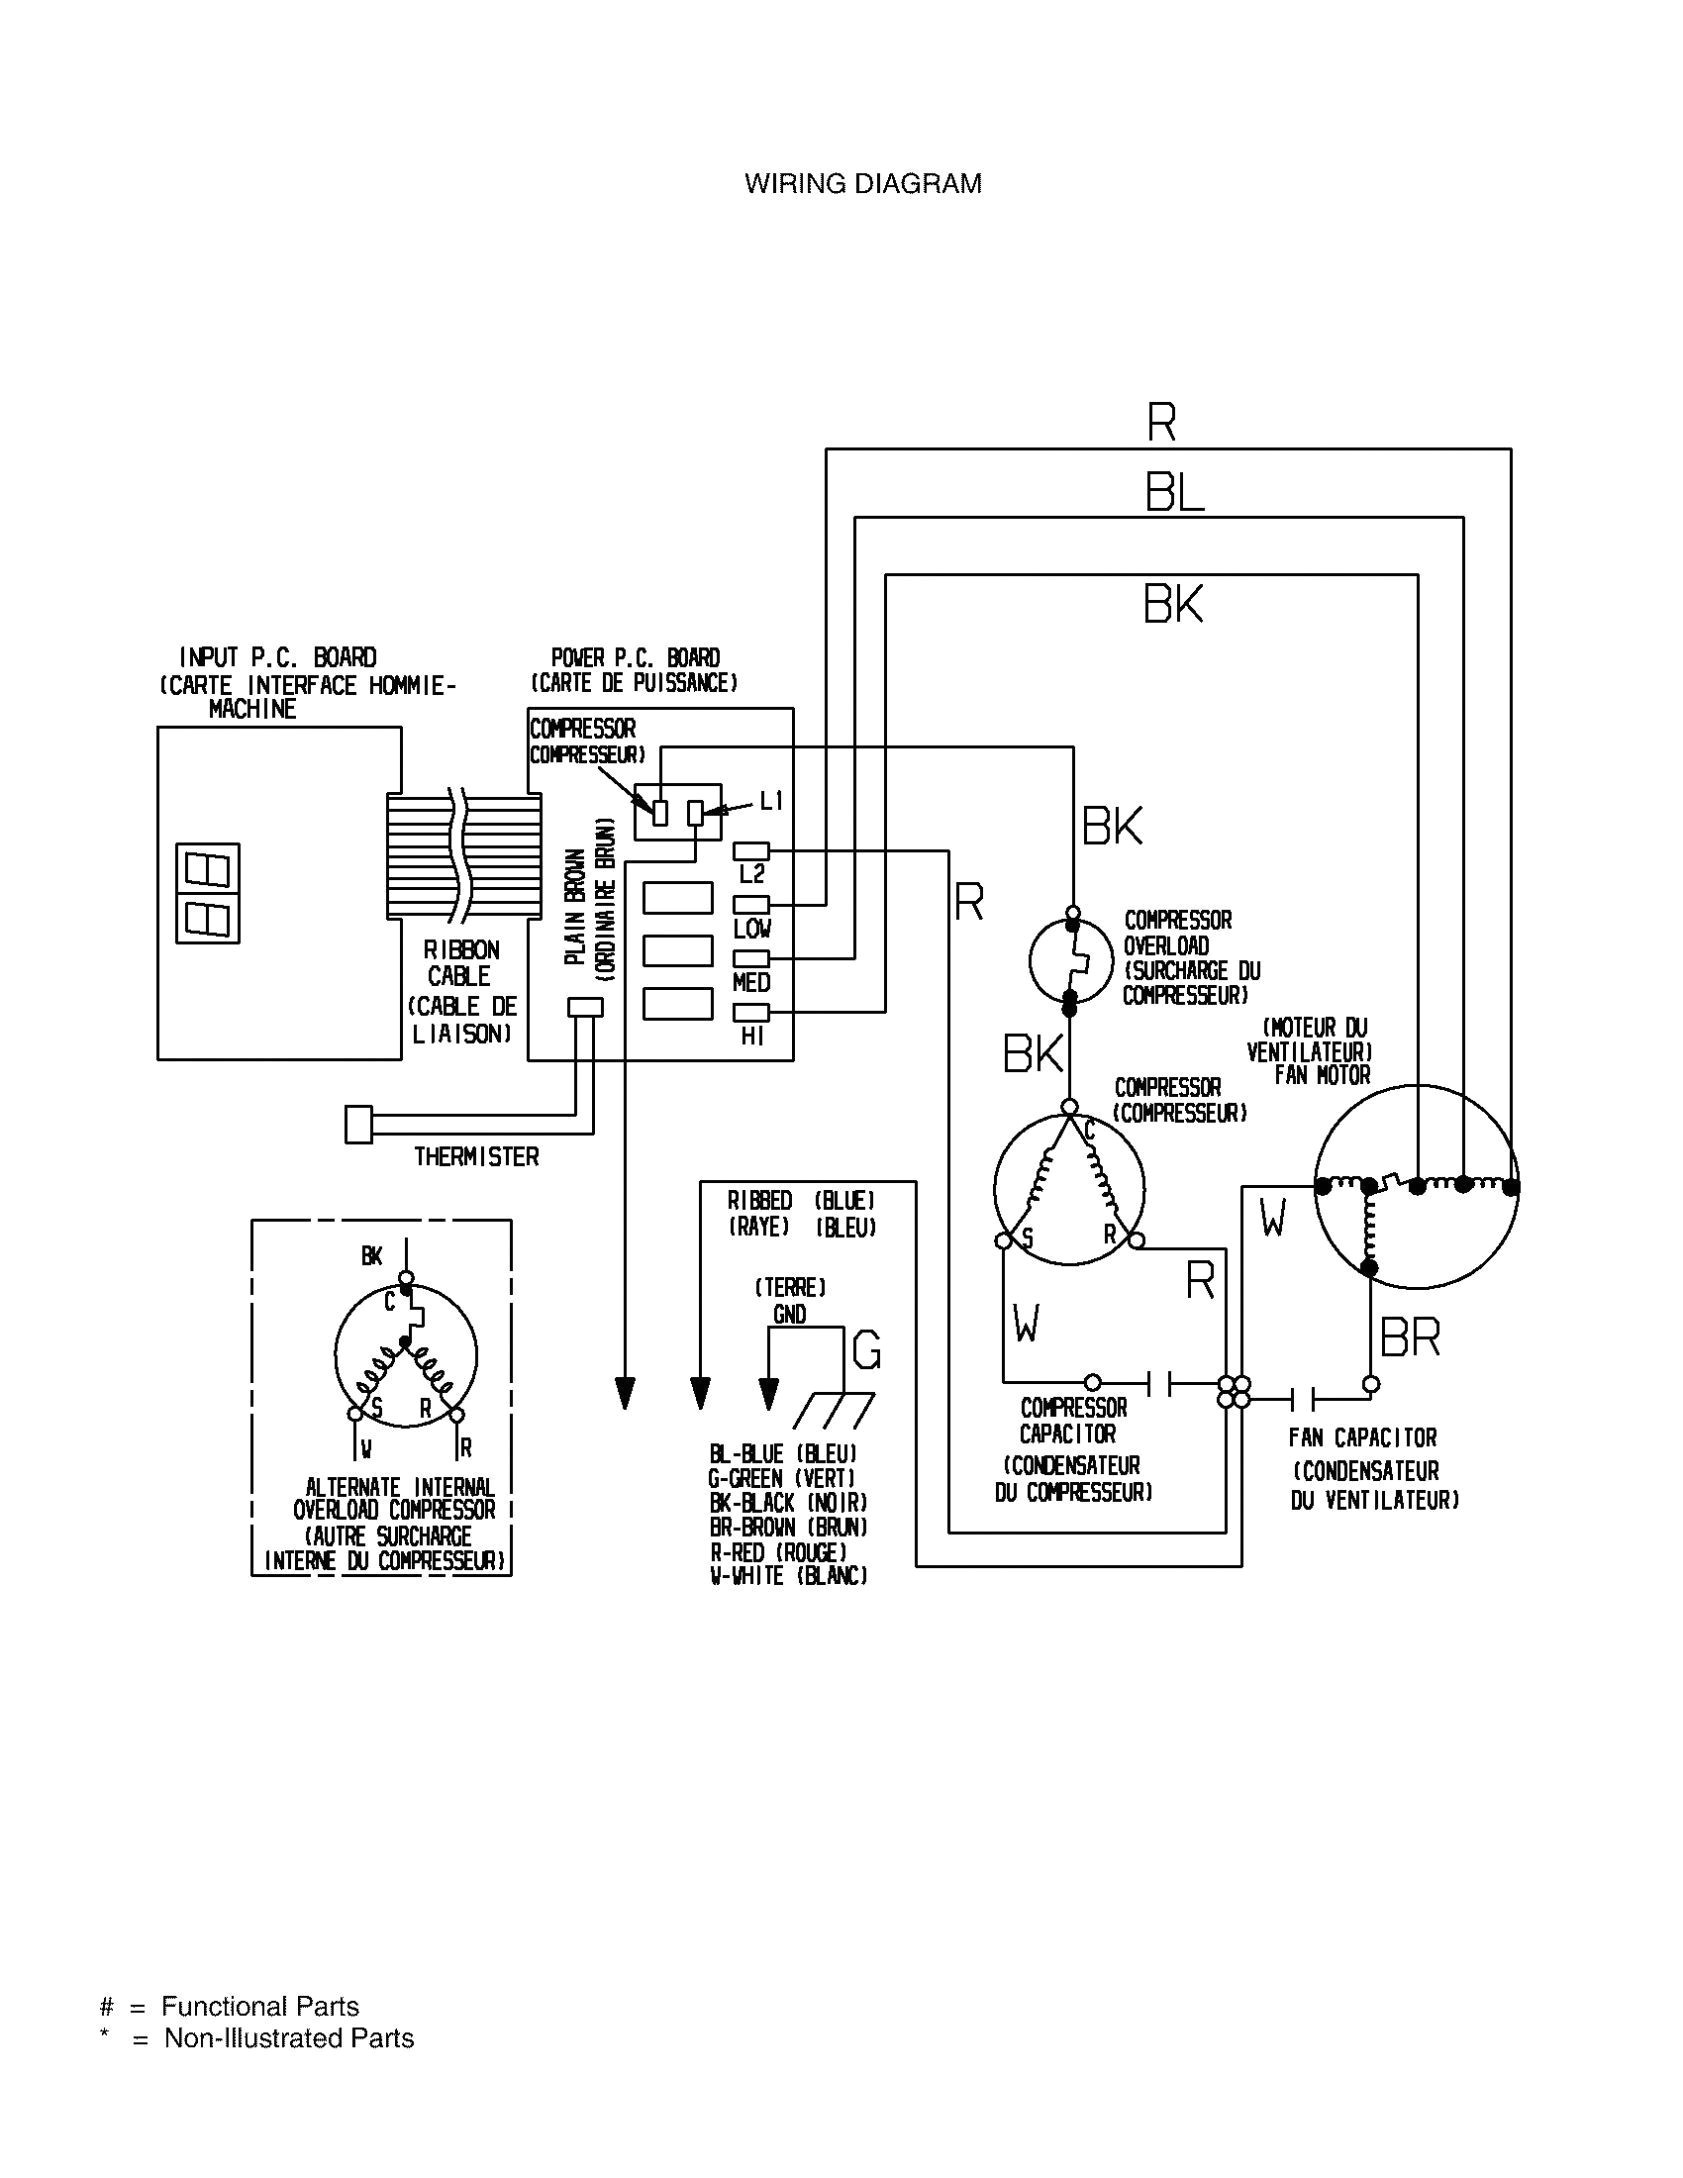 trane air conditioning wiring diagram detailed schematics diagram rh antonartgallery com